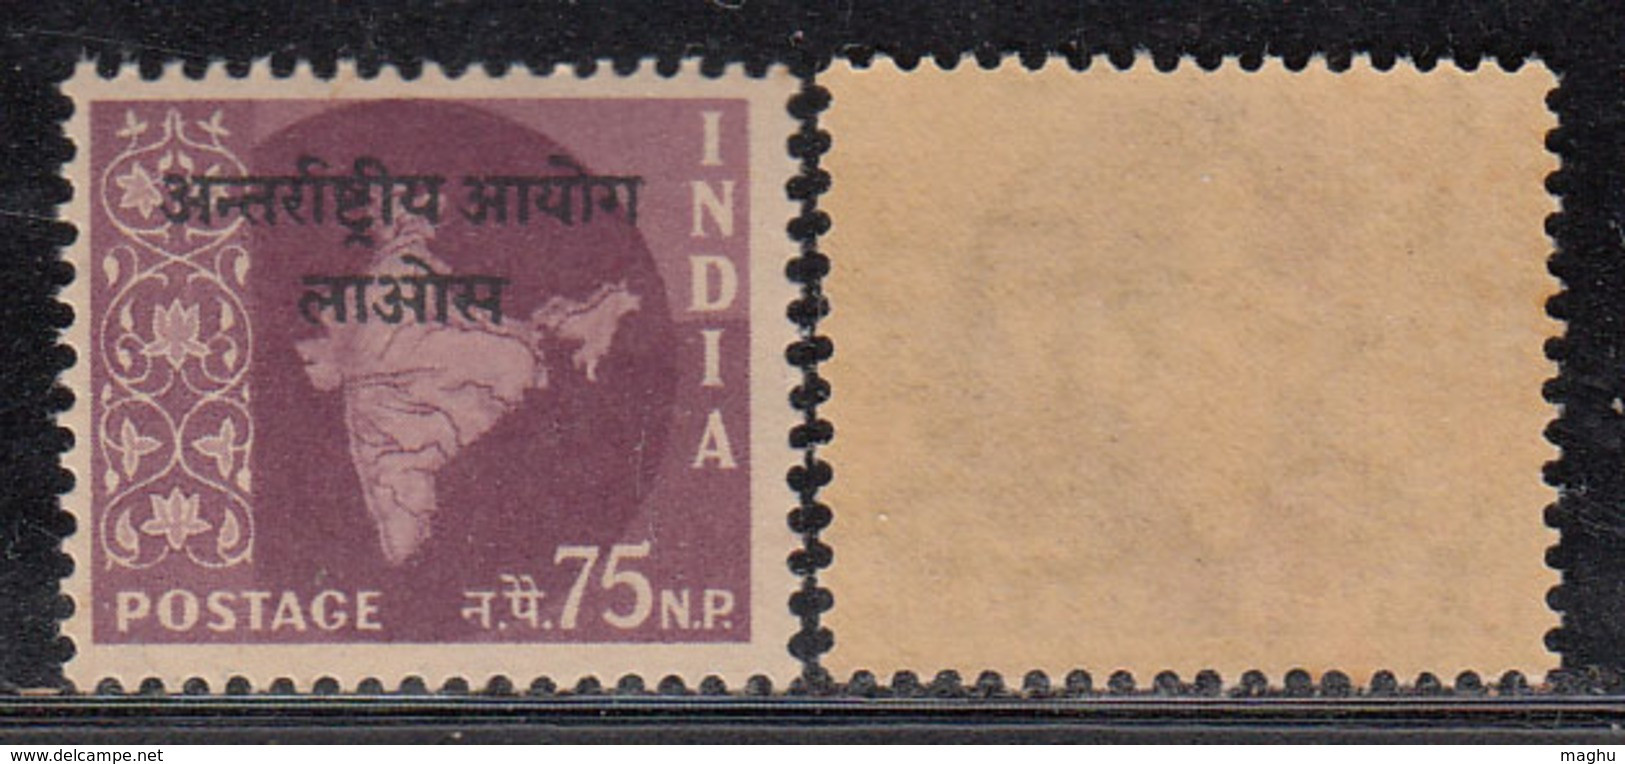 75np Ovpt  Laos On Map Series,  India MNH 1962 - 1965, Ashokan Watermark, - Military Service Stamp